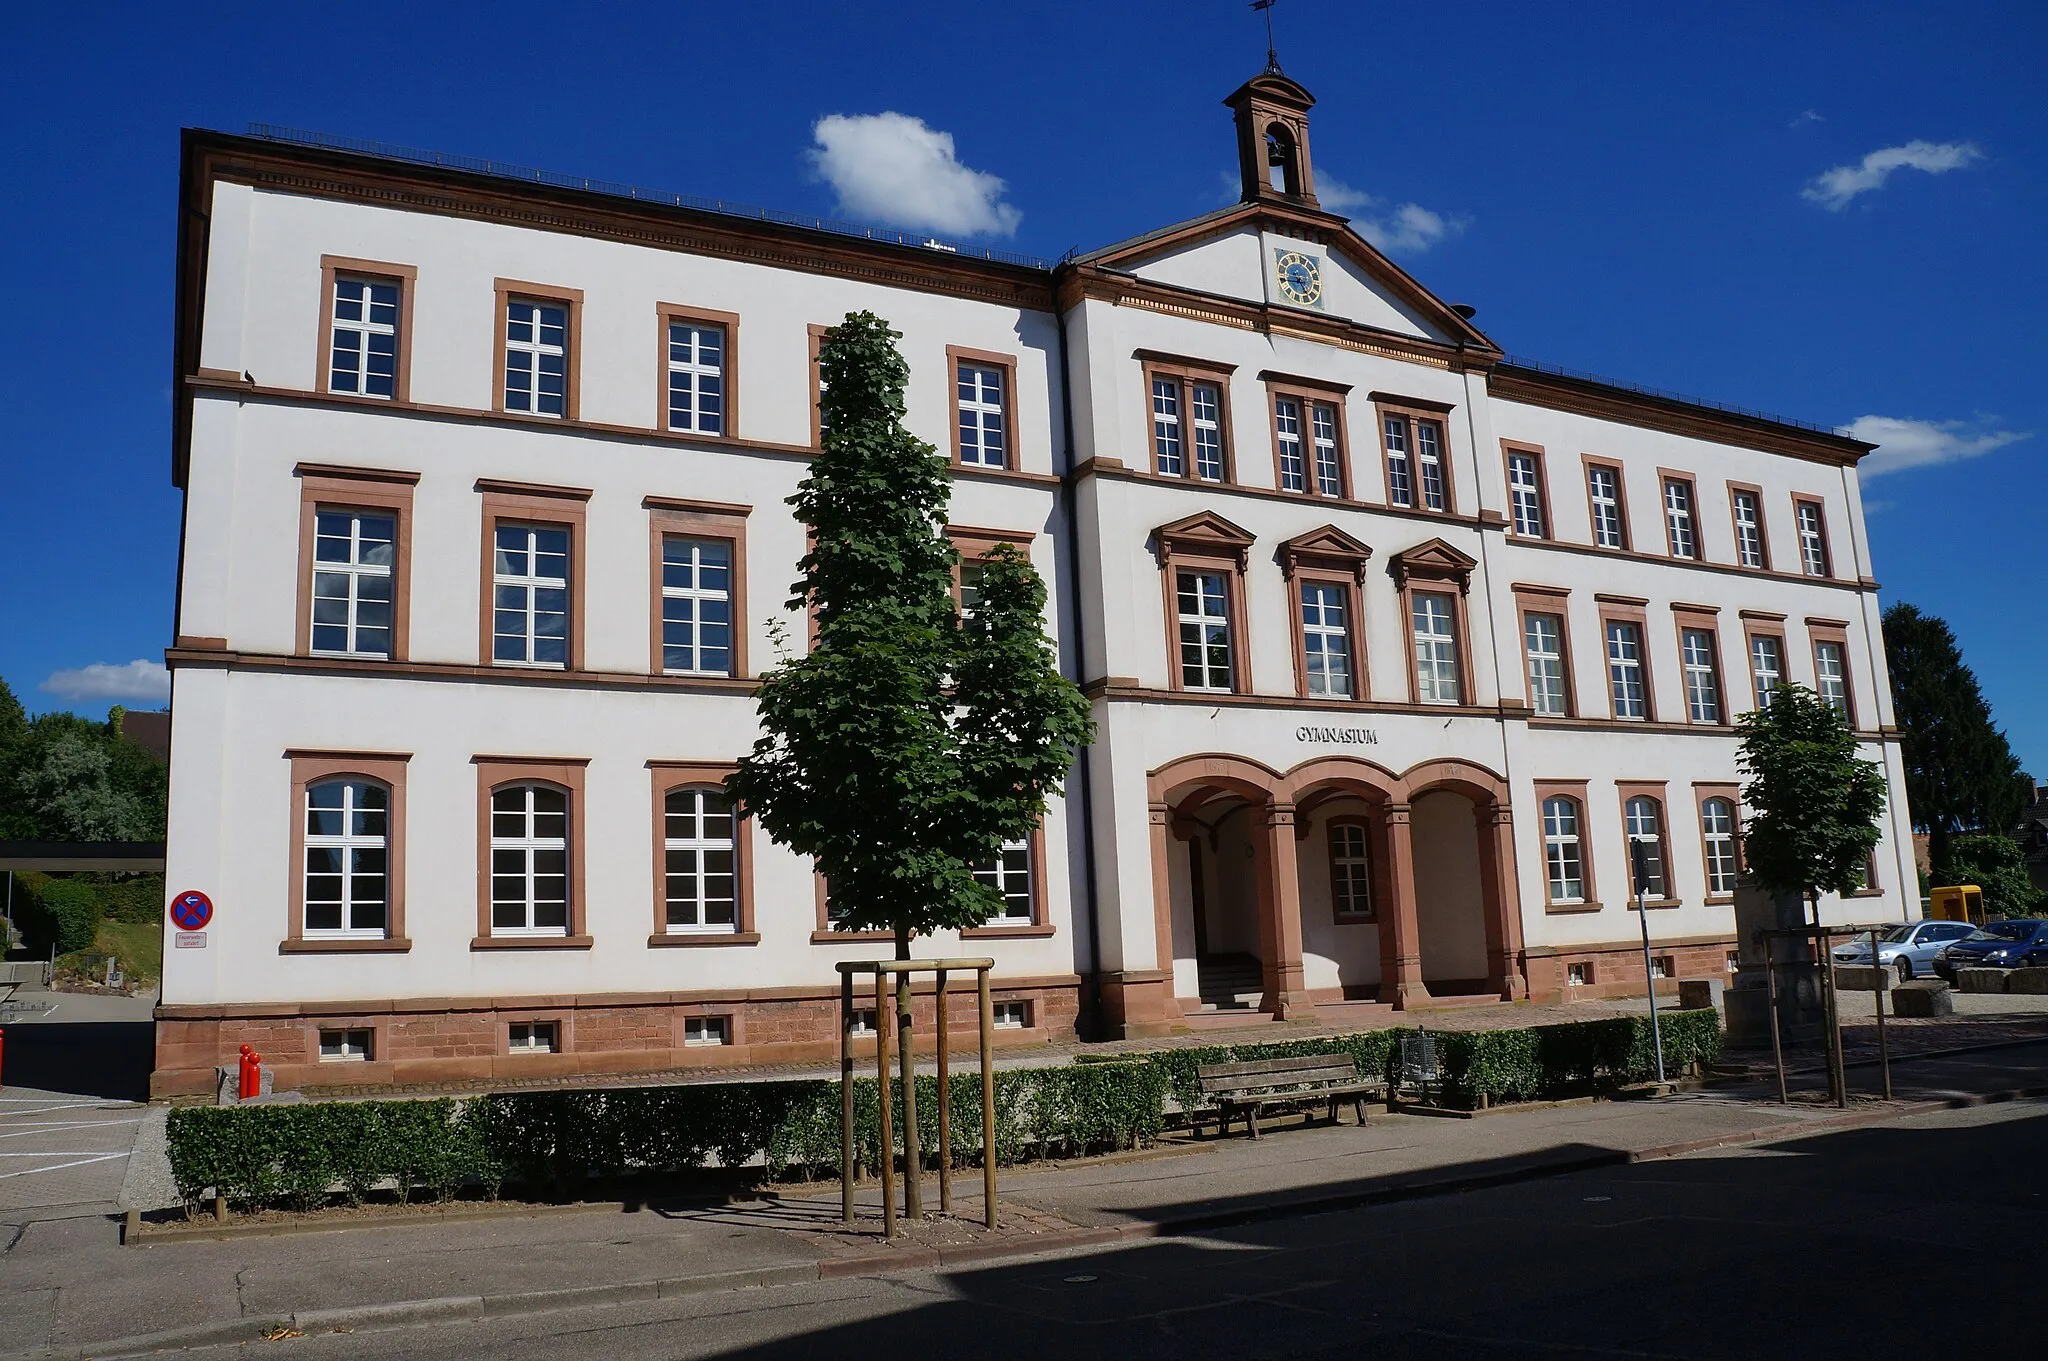 Image de Freiburg